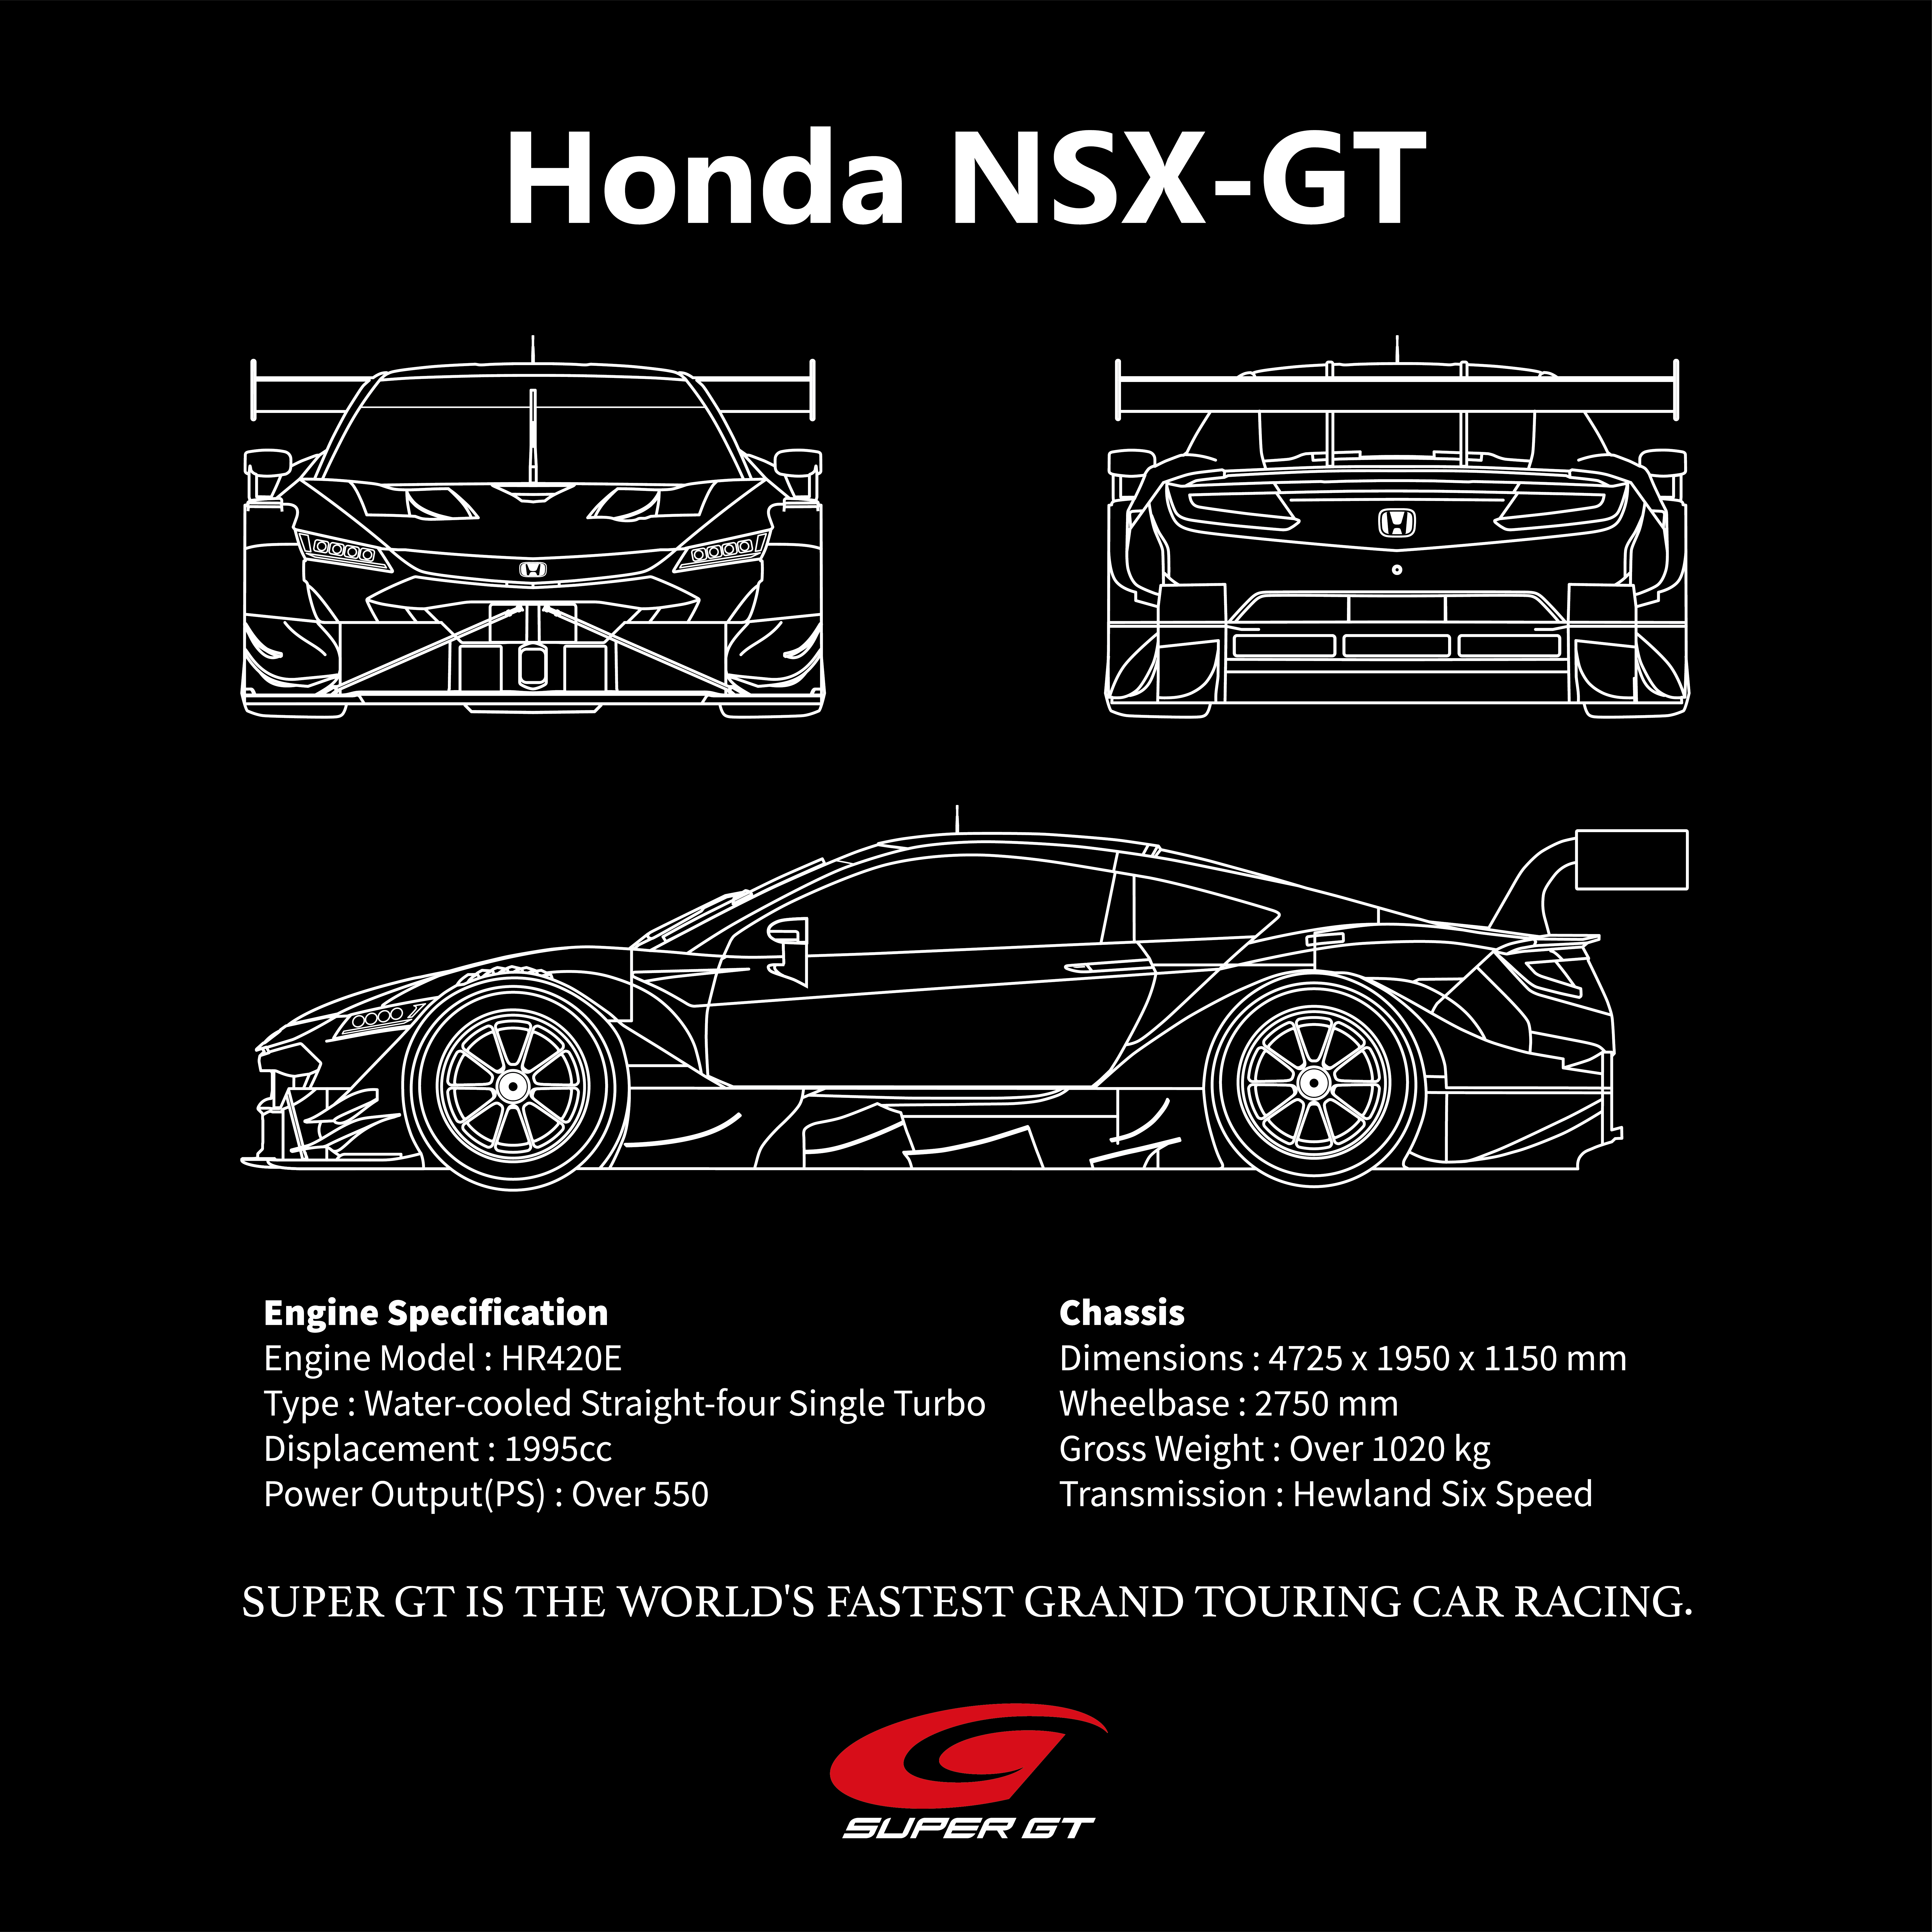 GT500マシン Tシャツ Honda（XXLサイズ）